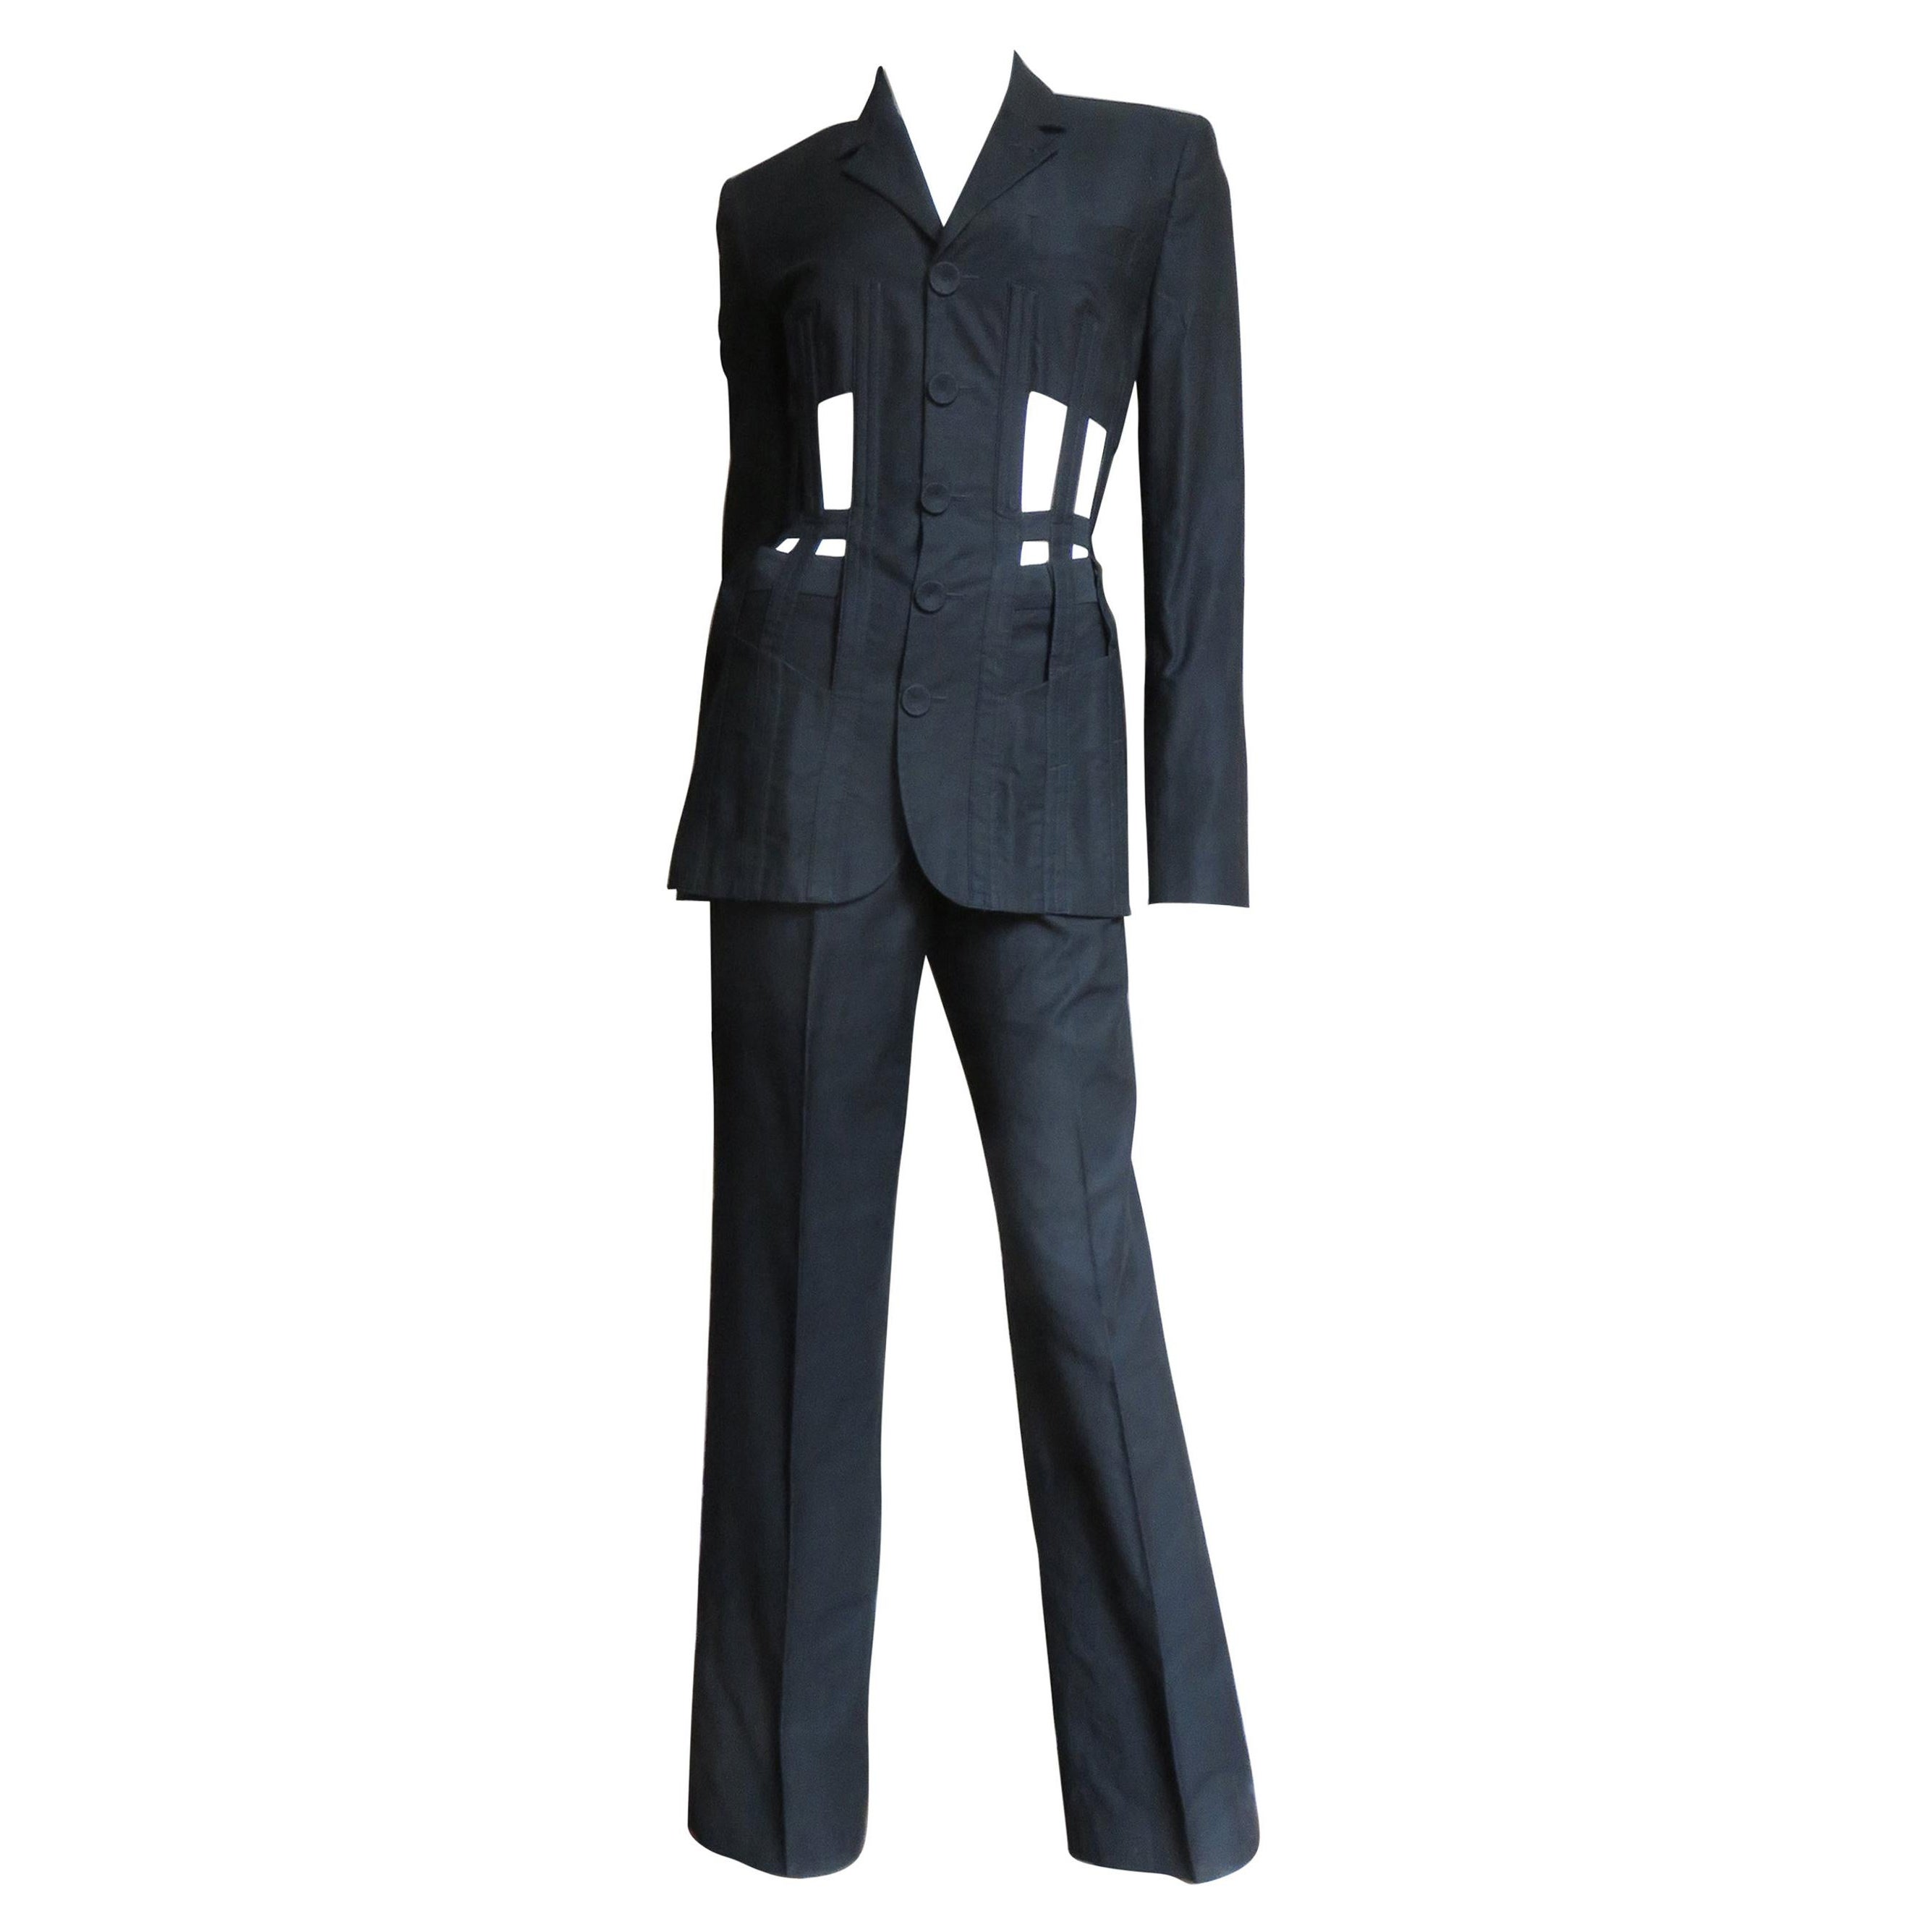 Jean Paul Gaultier Iconic Cage Corset lace up Jacket Pant Suit S/S 1989 For Sale